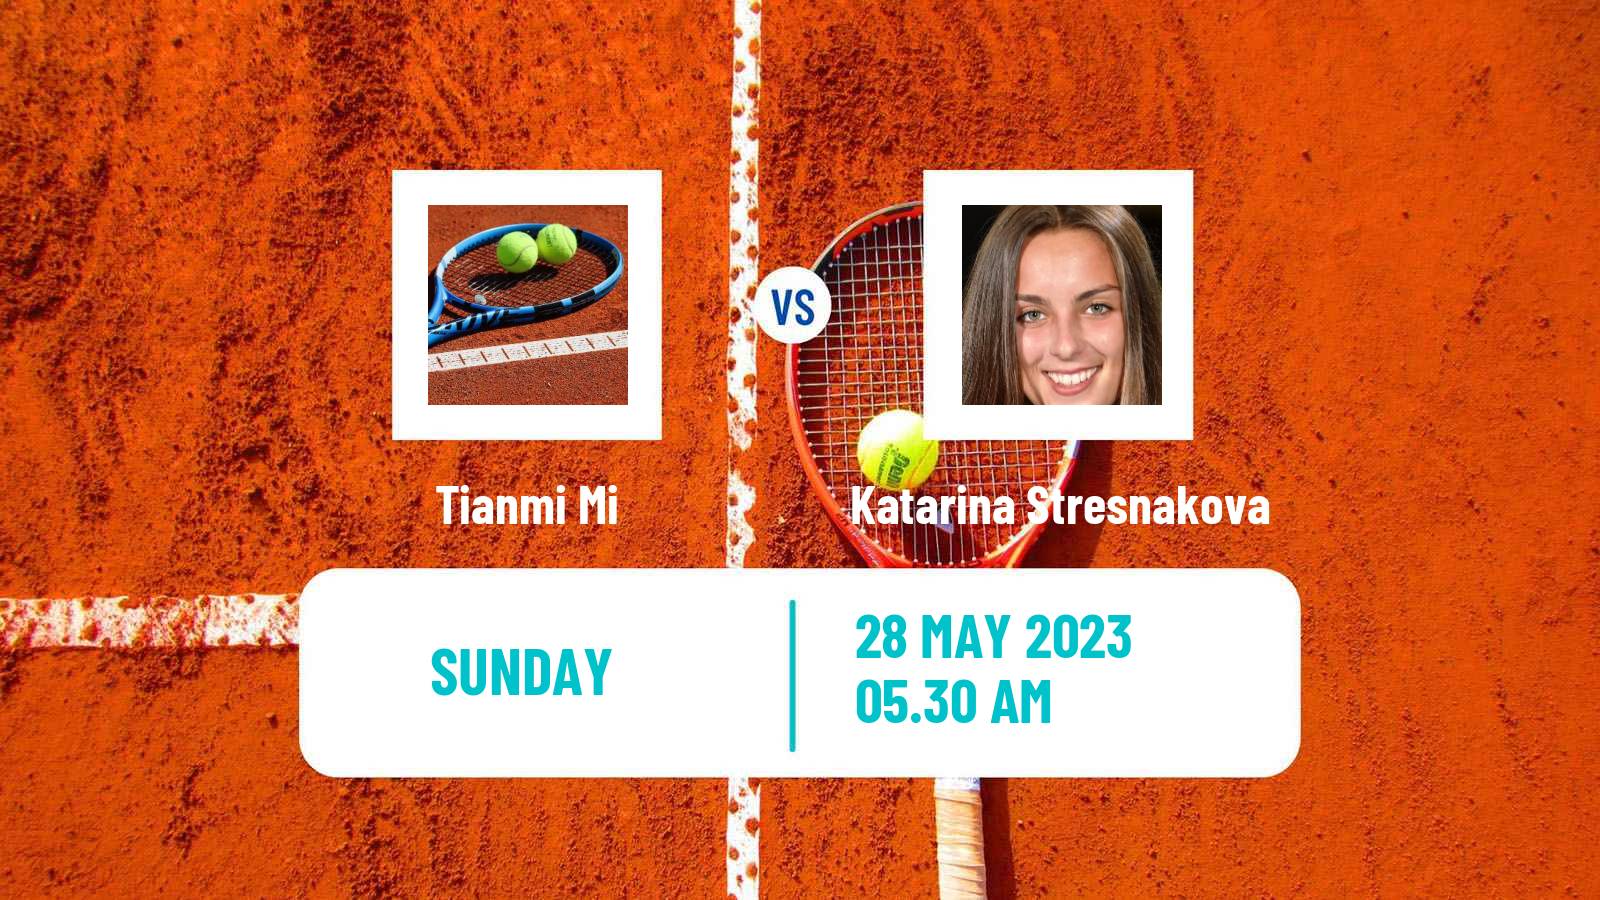 Tennis ITF W15 Malaga Women Tianmi Mi - Katarina Stresnakova